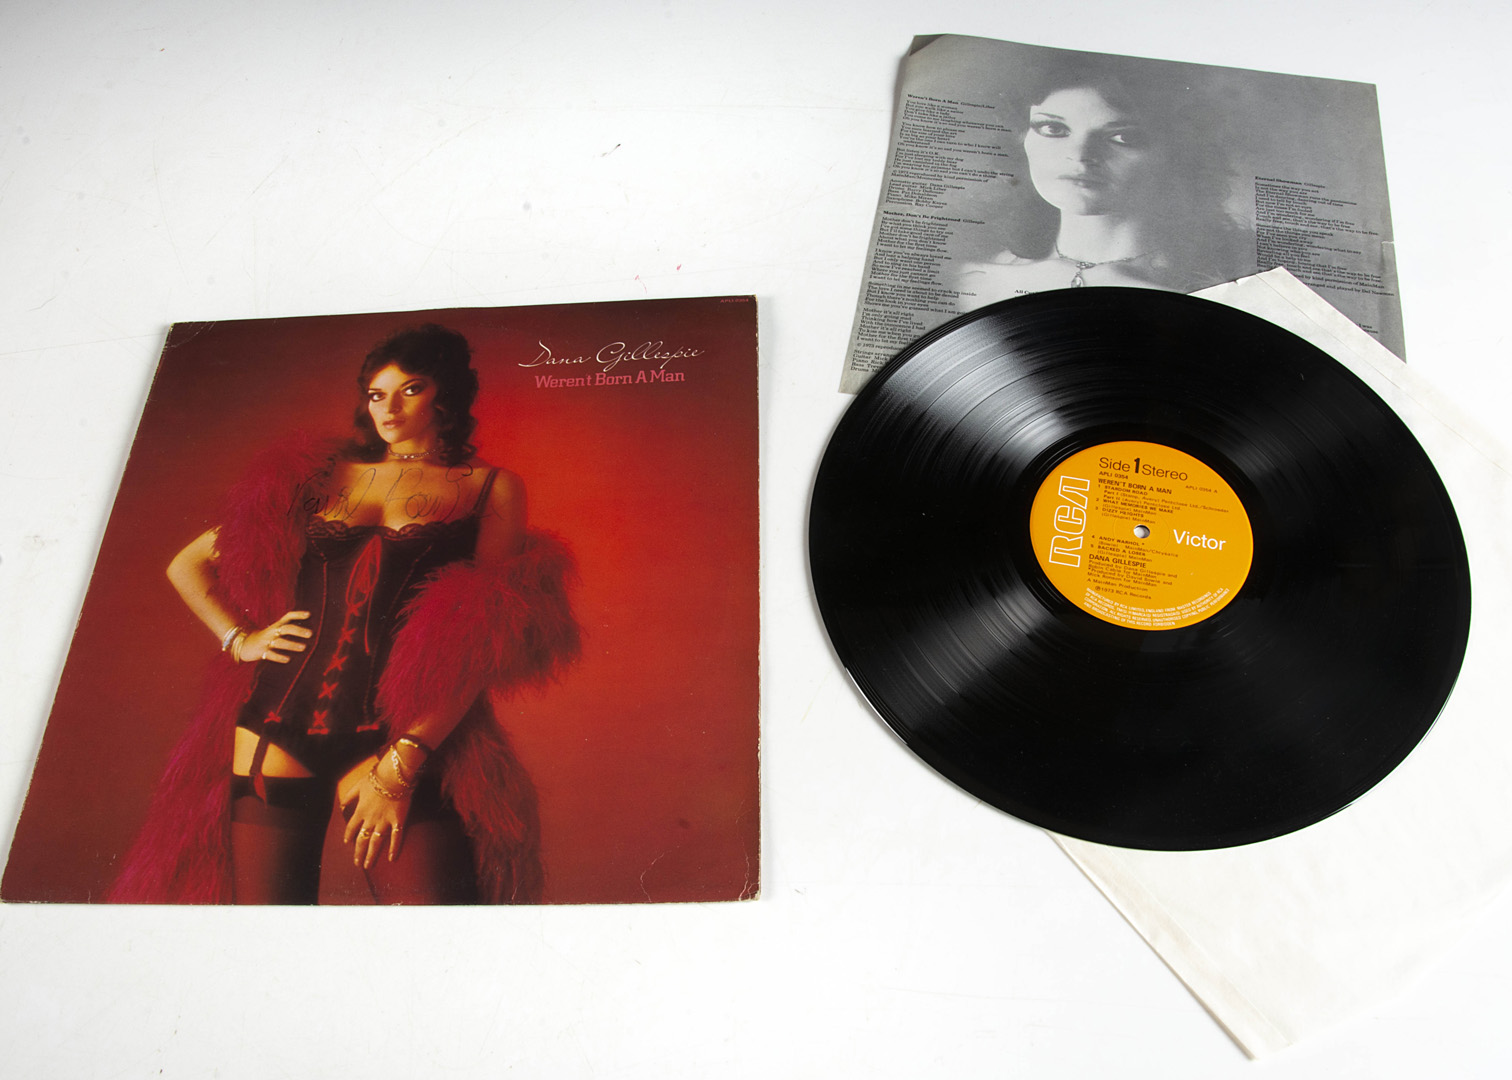 David Bowie / Mick Ronson / Signatures, Dana Gillespie - Weren't Born A Man LP - Original 1973 album